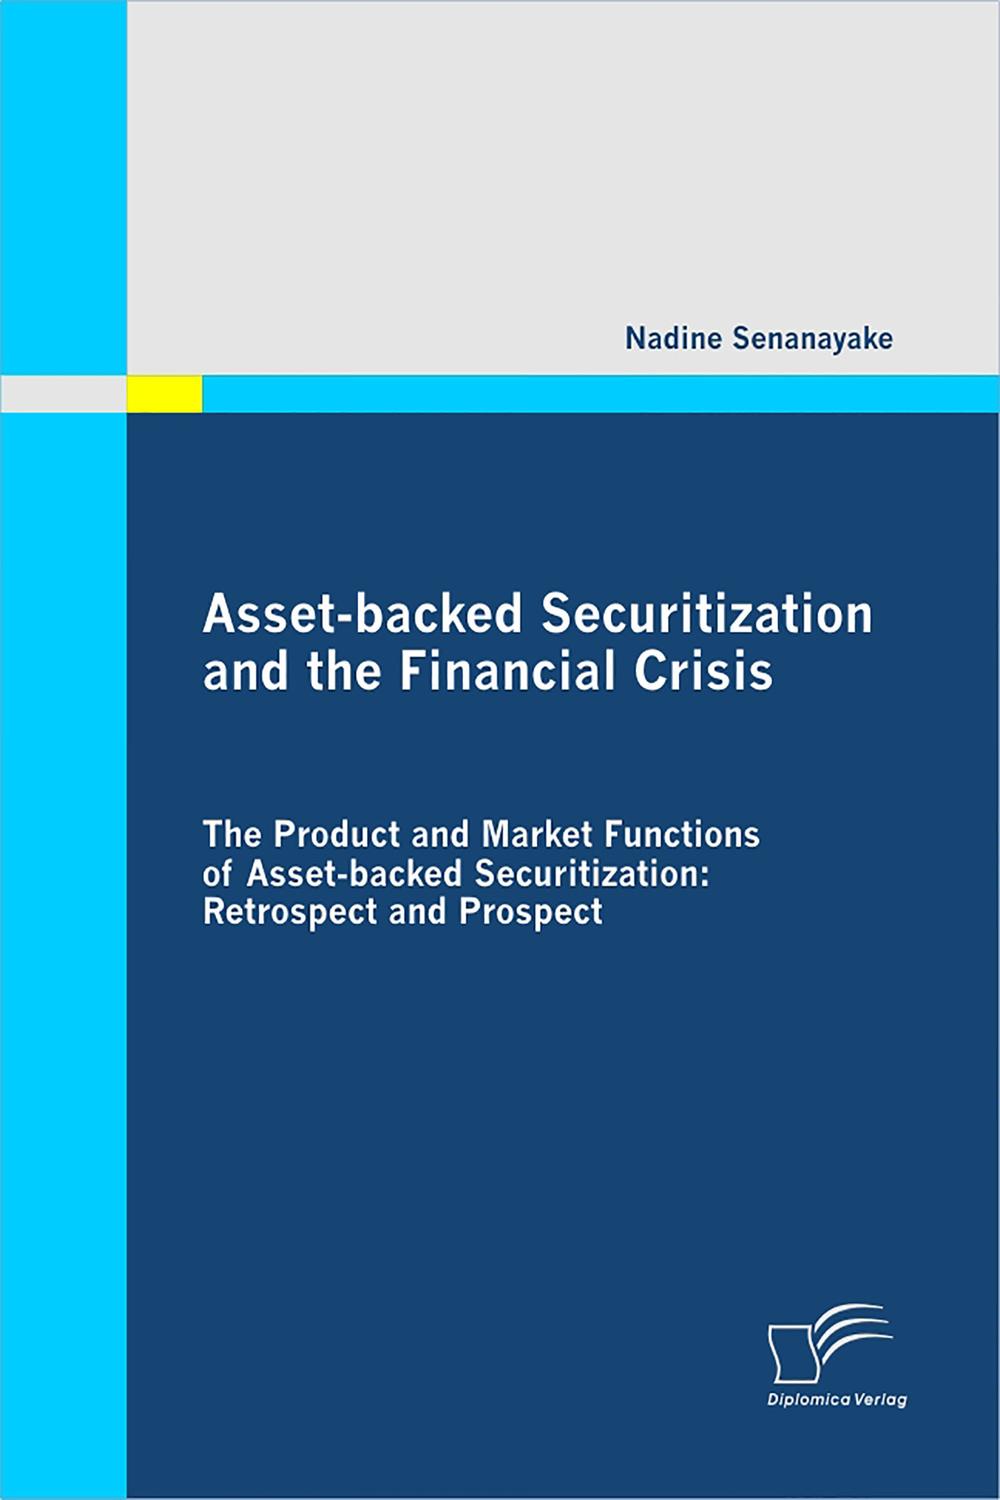 Asset-backed Securitization and the Financial Crisis - Nadine Senanayake